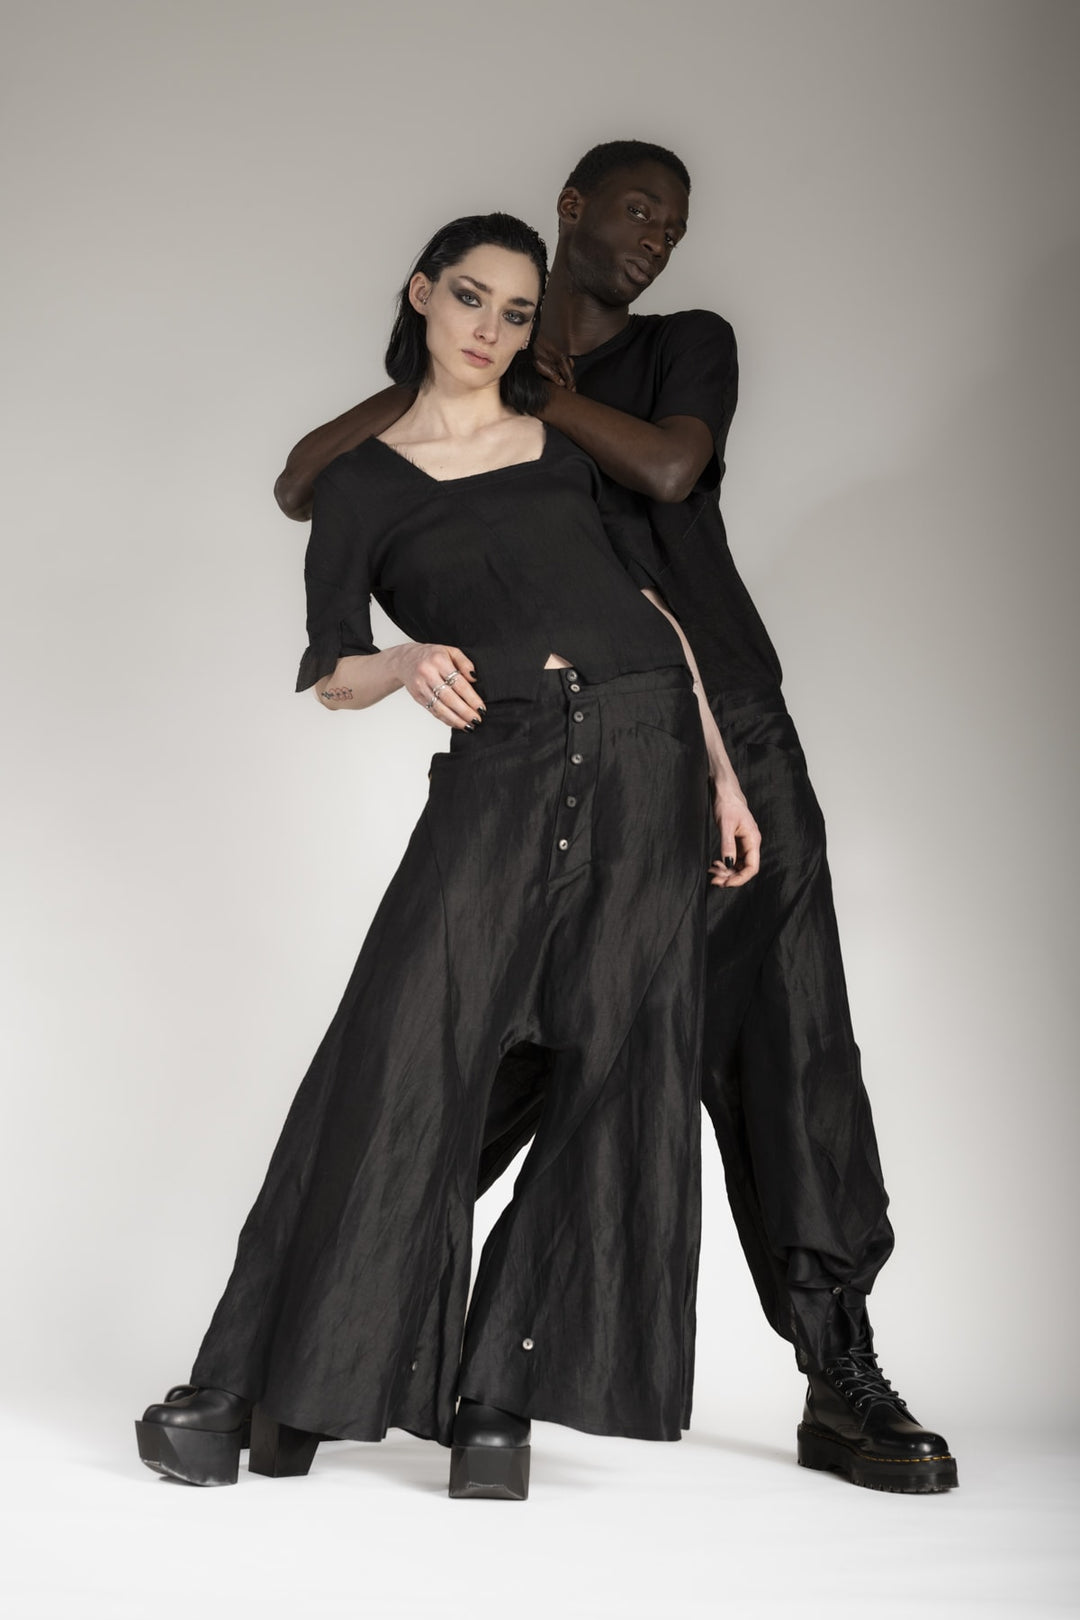 All Black Outfits - Unser Guide zu schwarzer Designermode